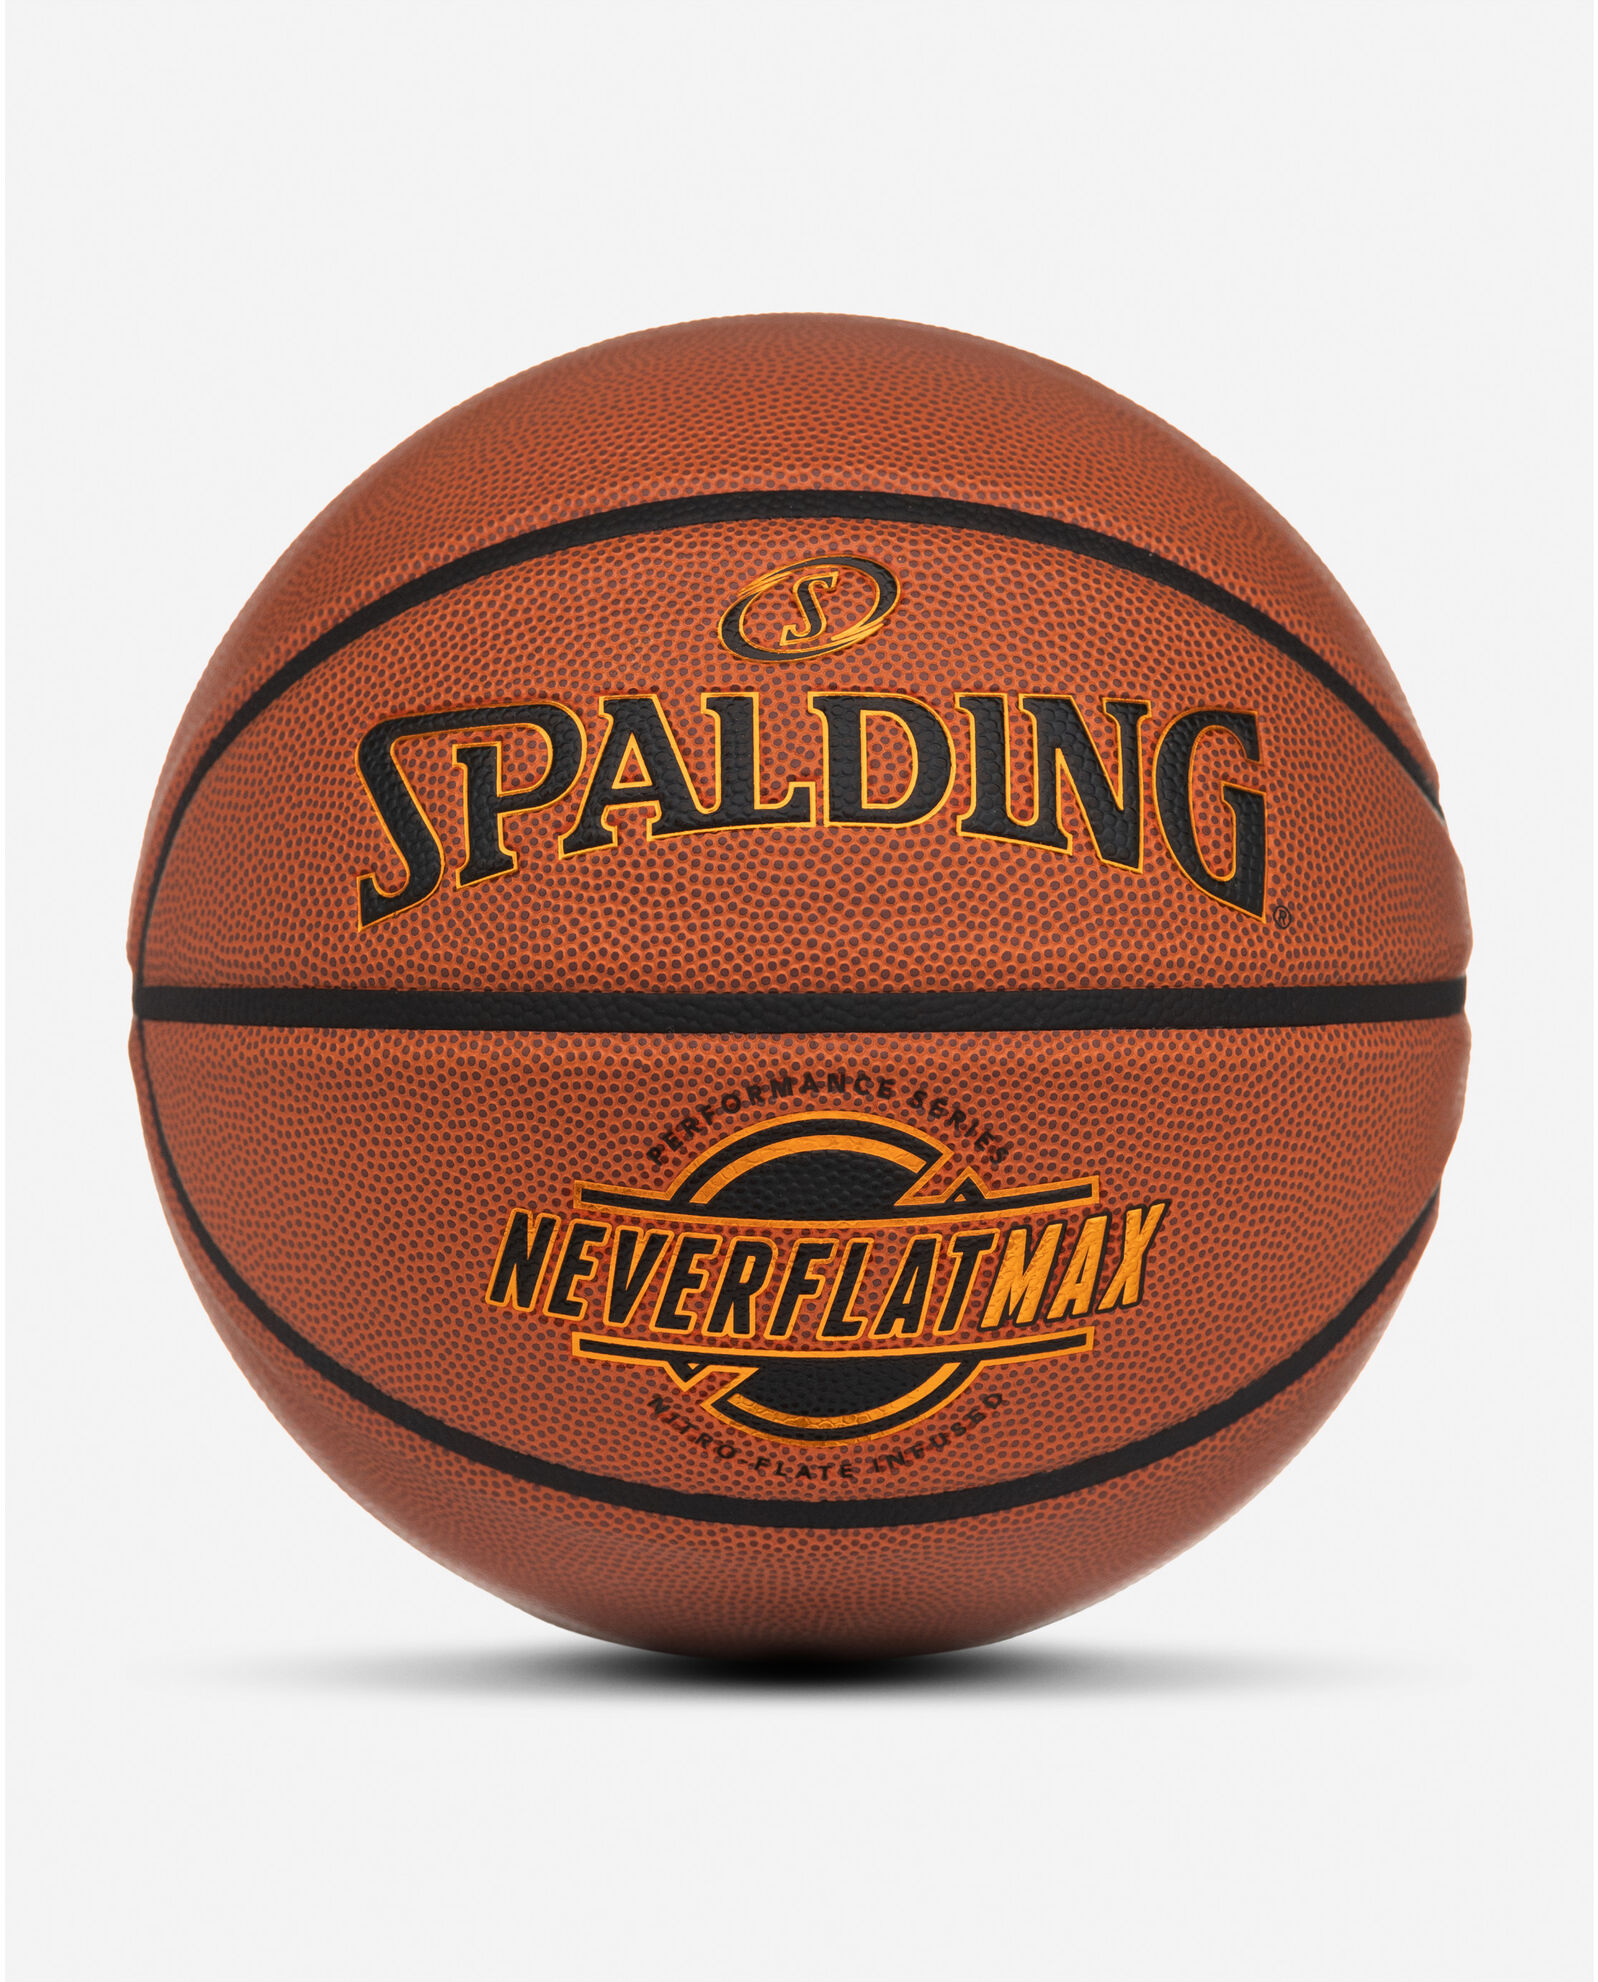 NeverFlat Max Indoor-Outdoor Basketball 